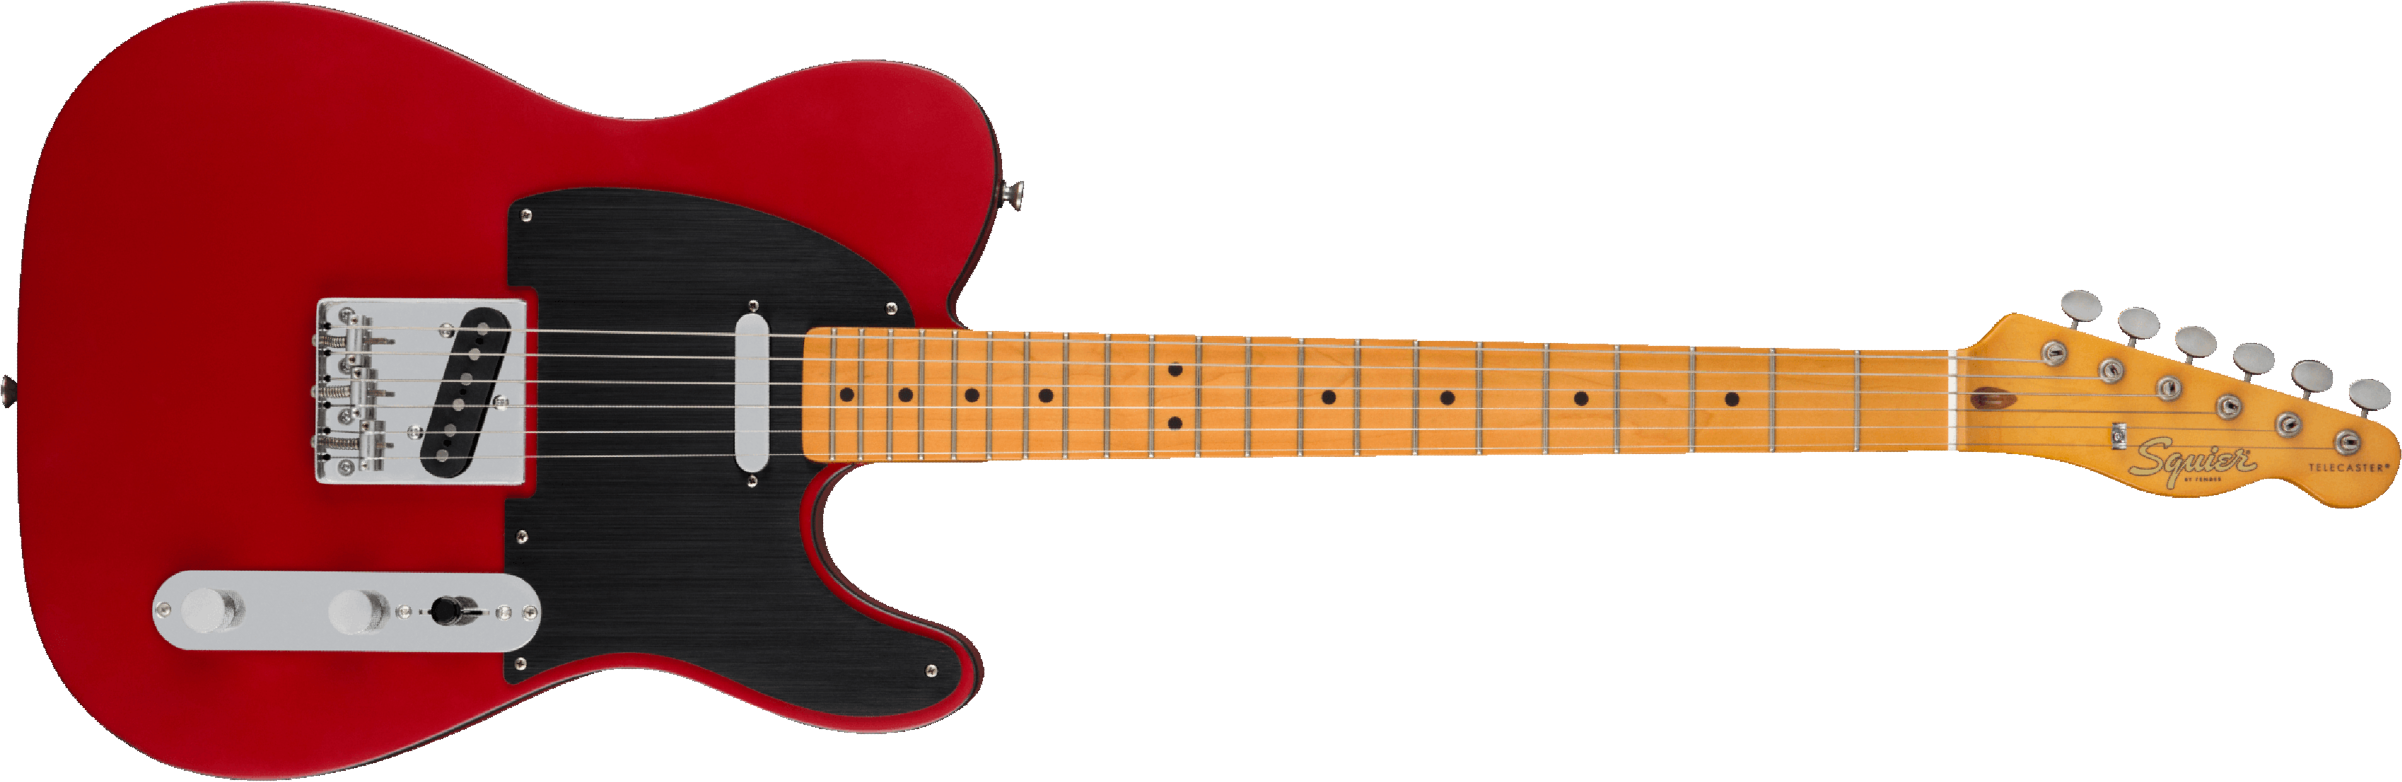 Squier Tele 40th Anniversary Vintage Edition Mn - Satin Dakota Red - Guitare Électrique Forme Tel - Main picture